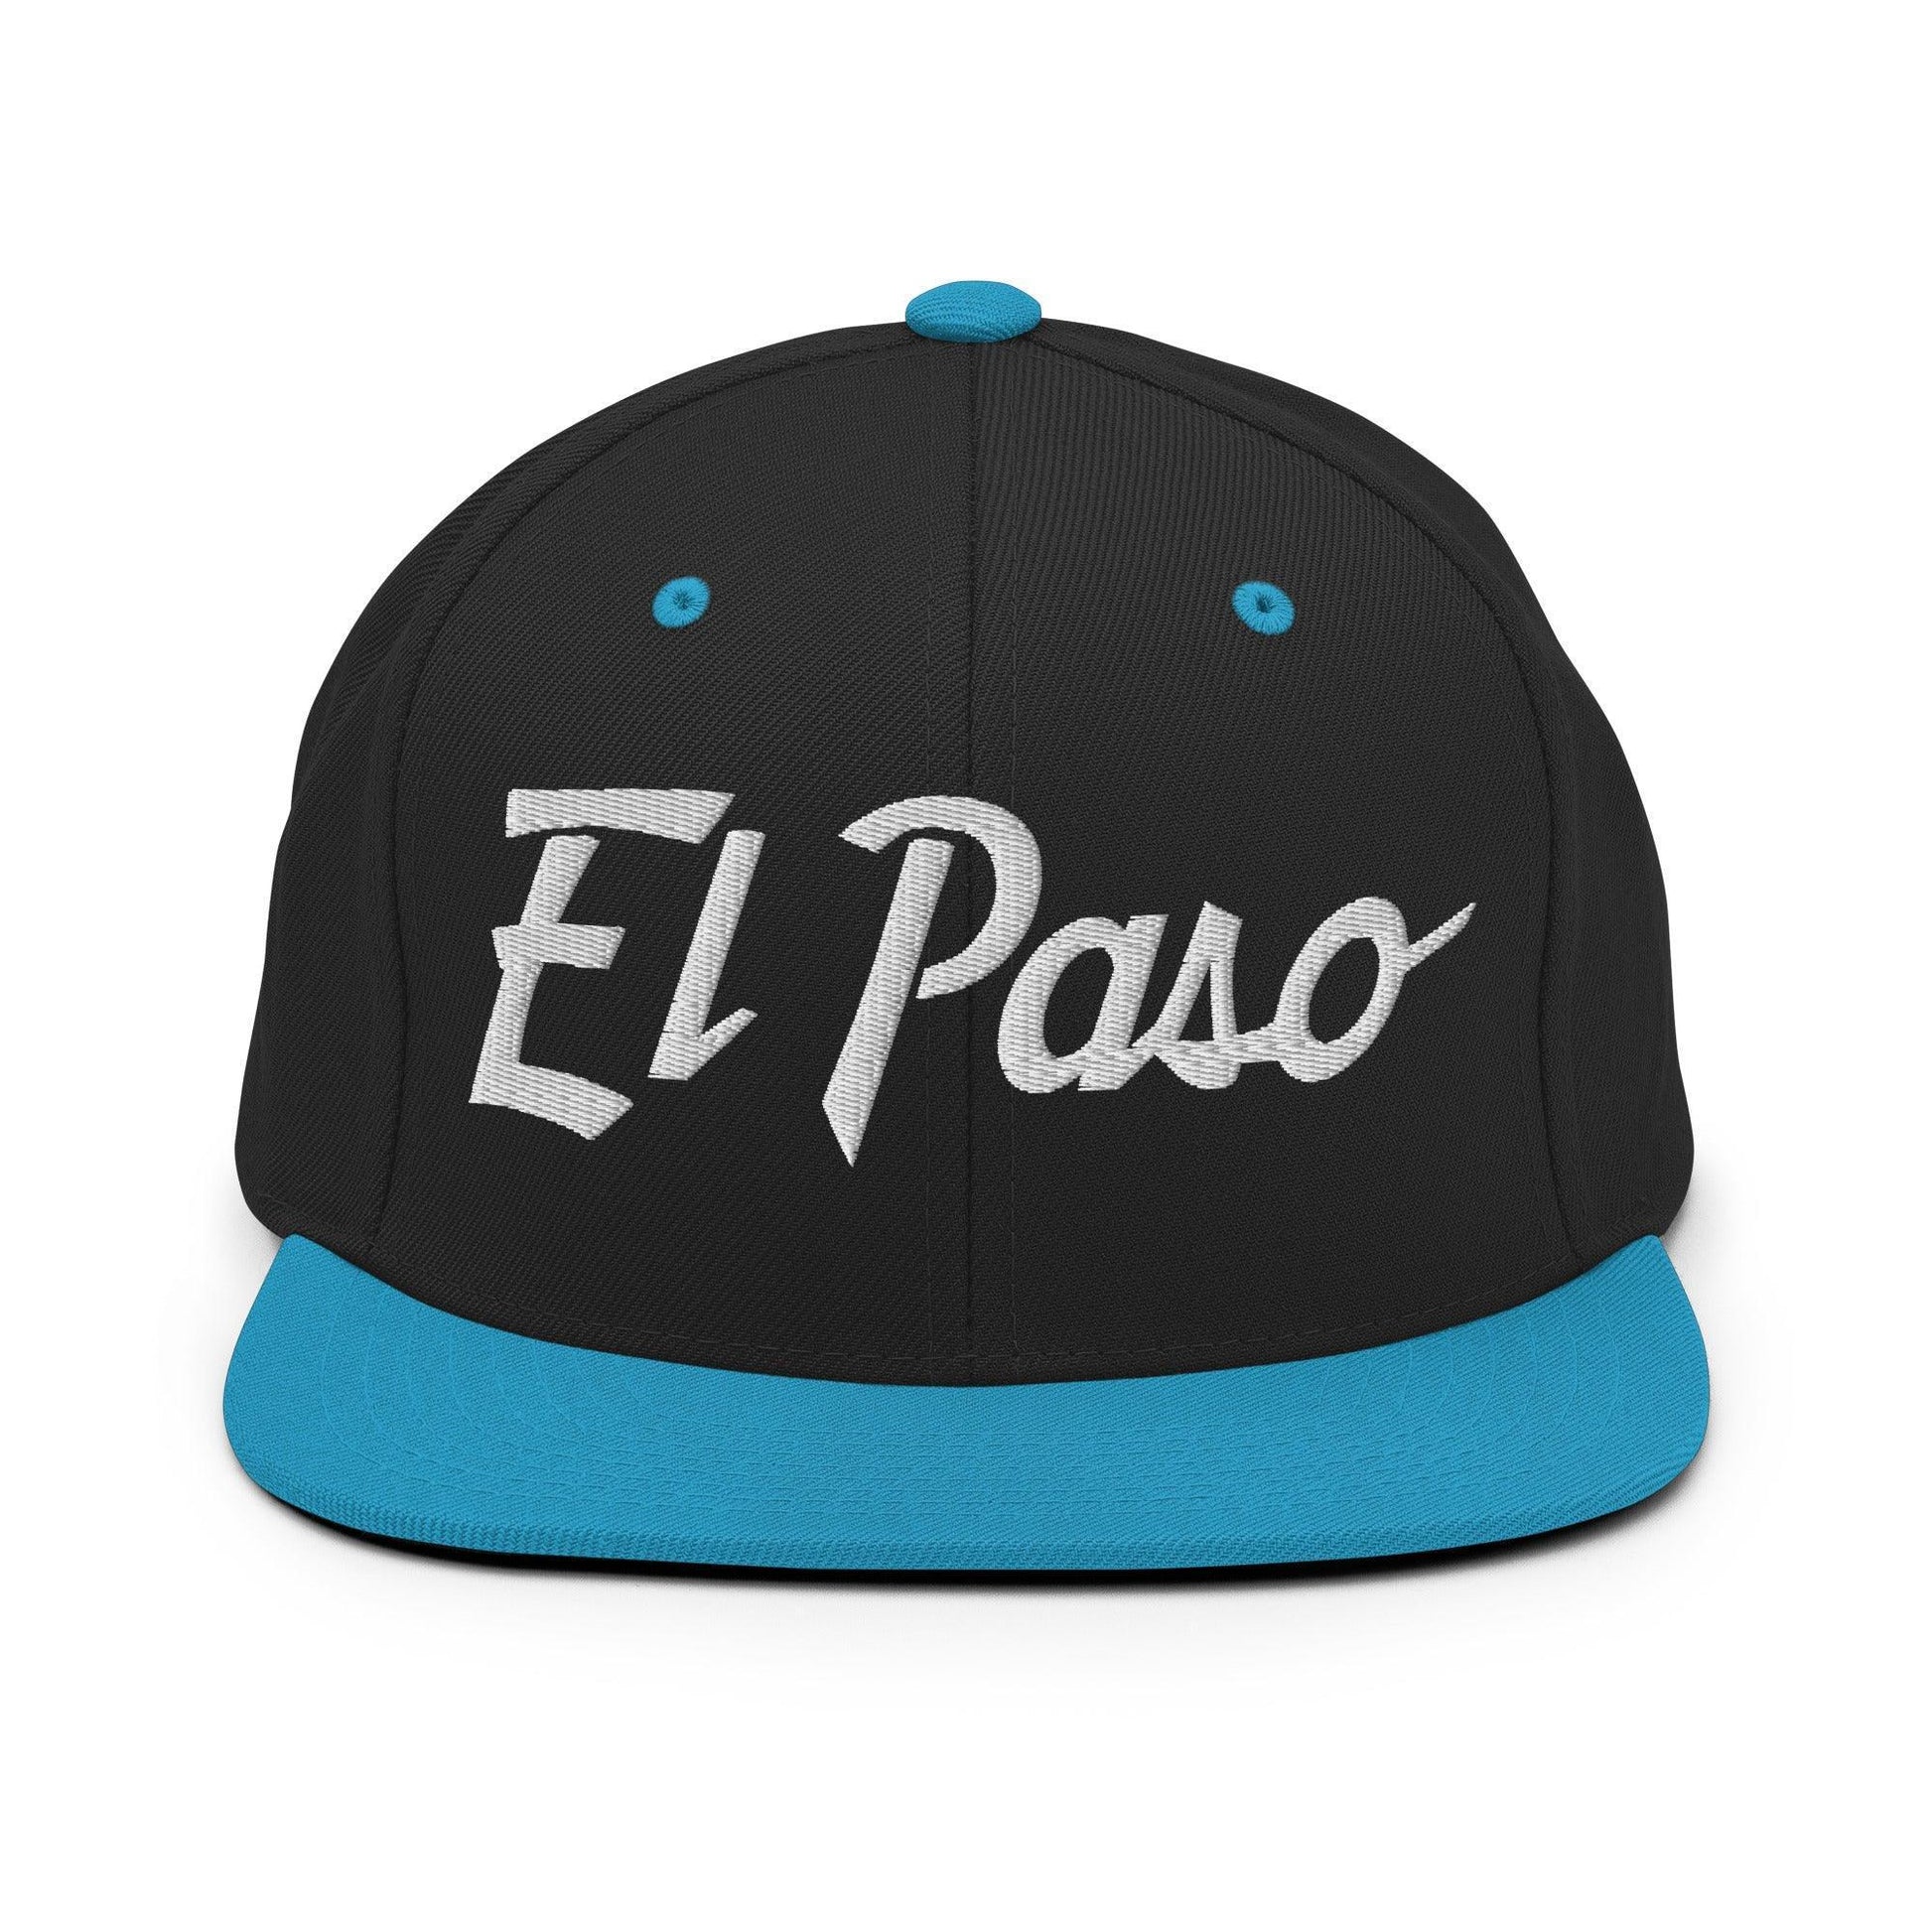 El Paso Script Snapback Hat Black Teal